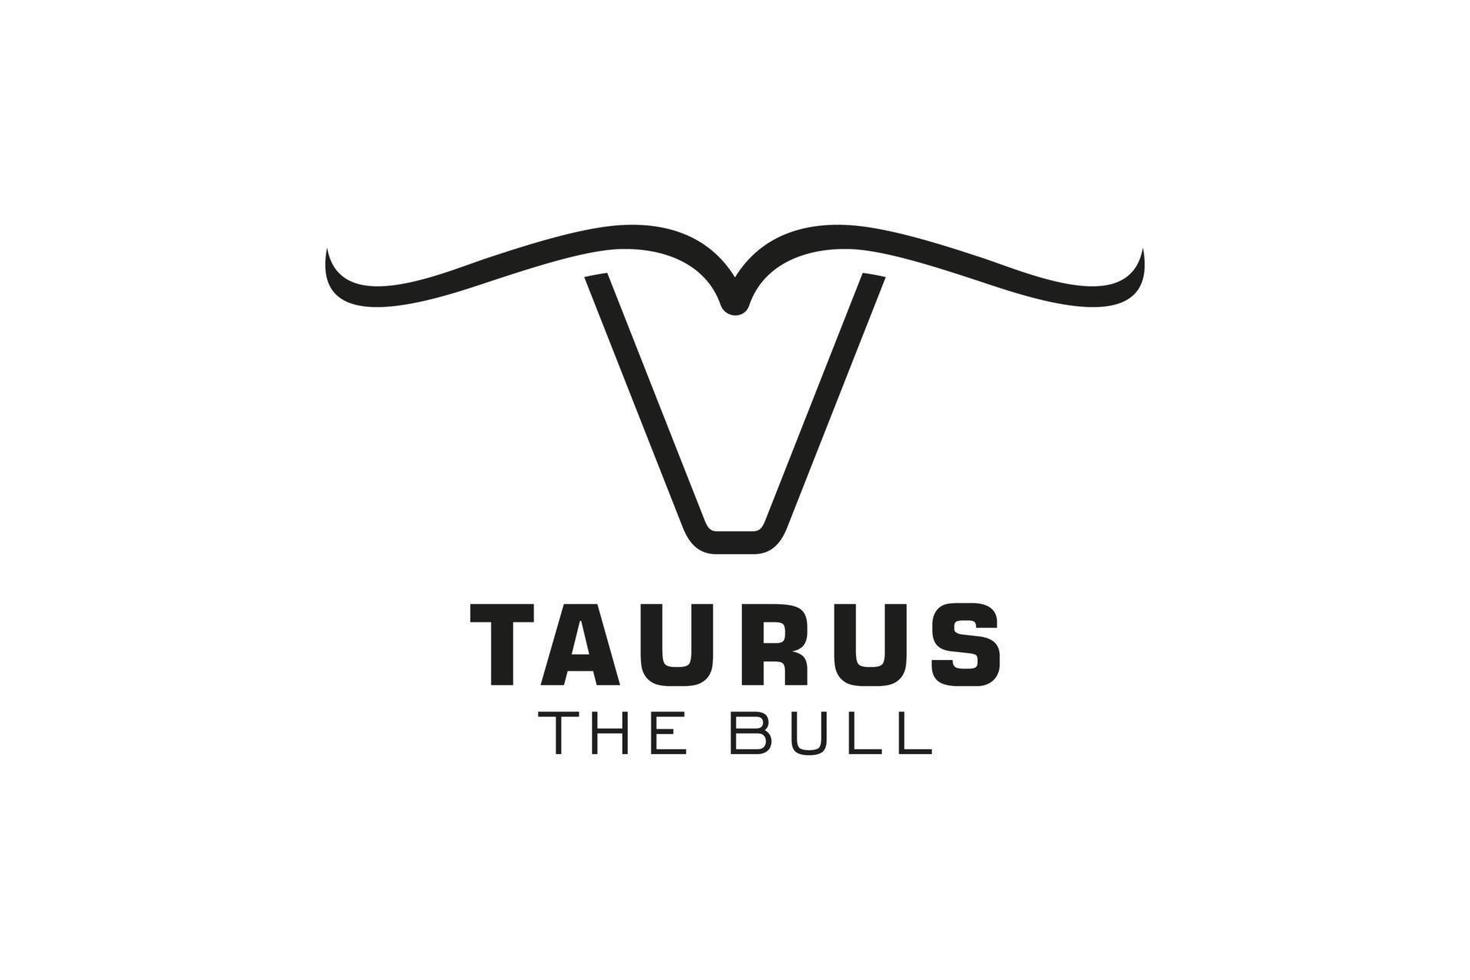 logotipo da letra u, logotipo do touro, logotipo da cabeça do touro, elemento de modelo de design do logotipo do monograma vetor